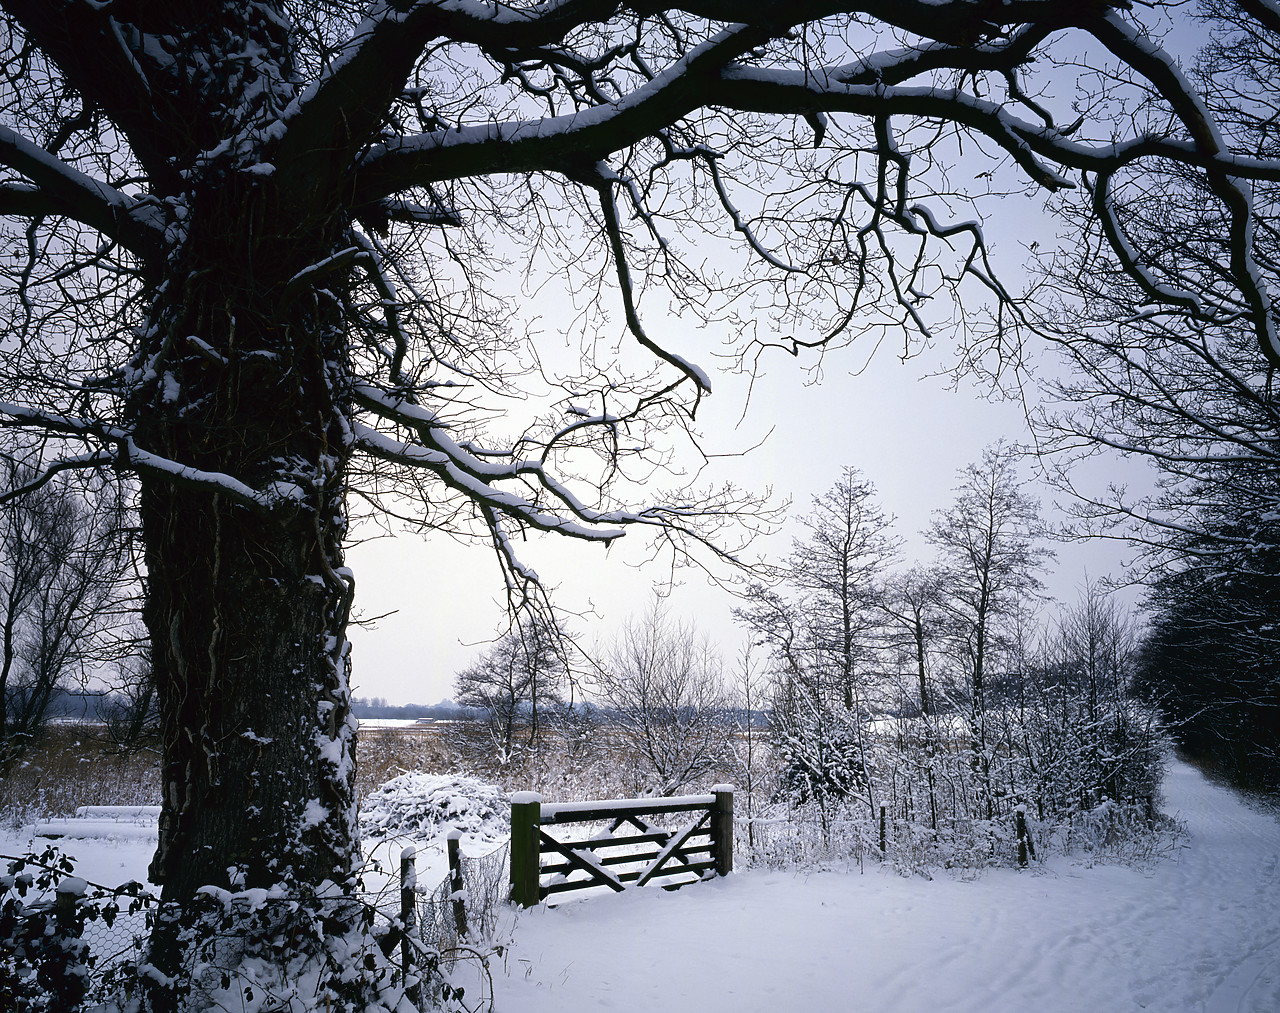 #913233 - Tree & Gate in Winter, Surlingham, Norfolk, England